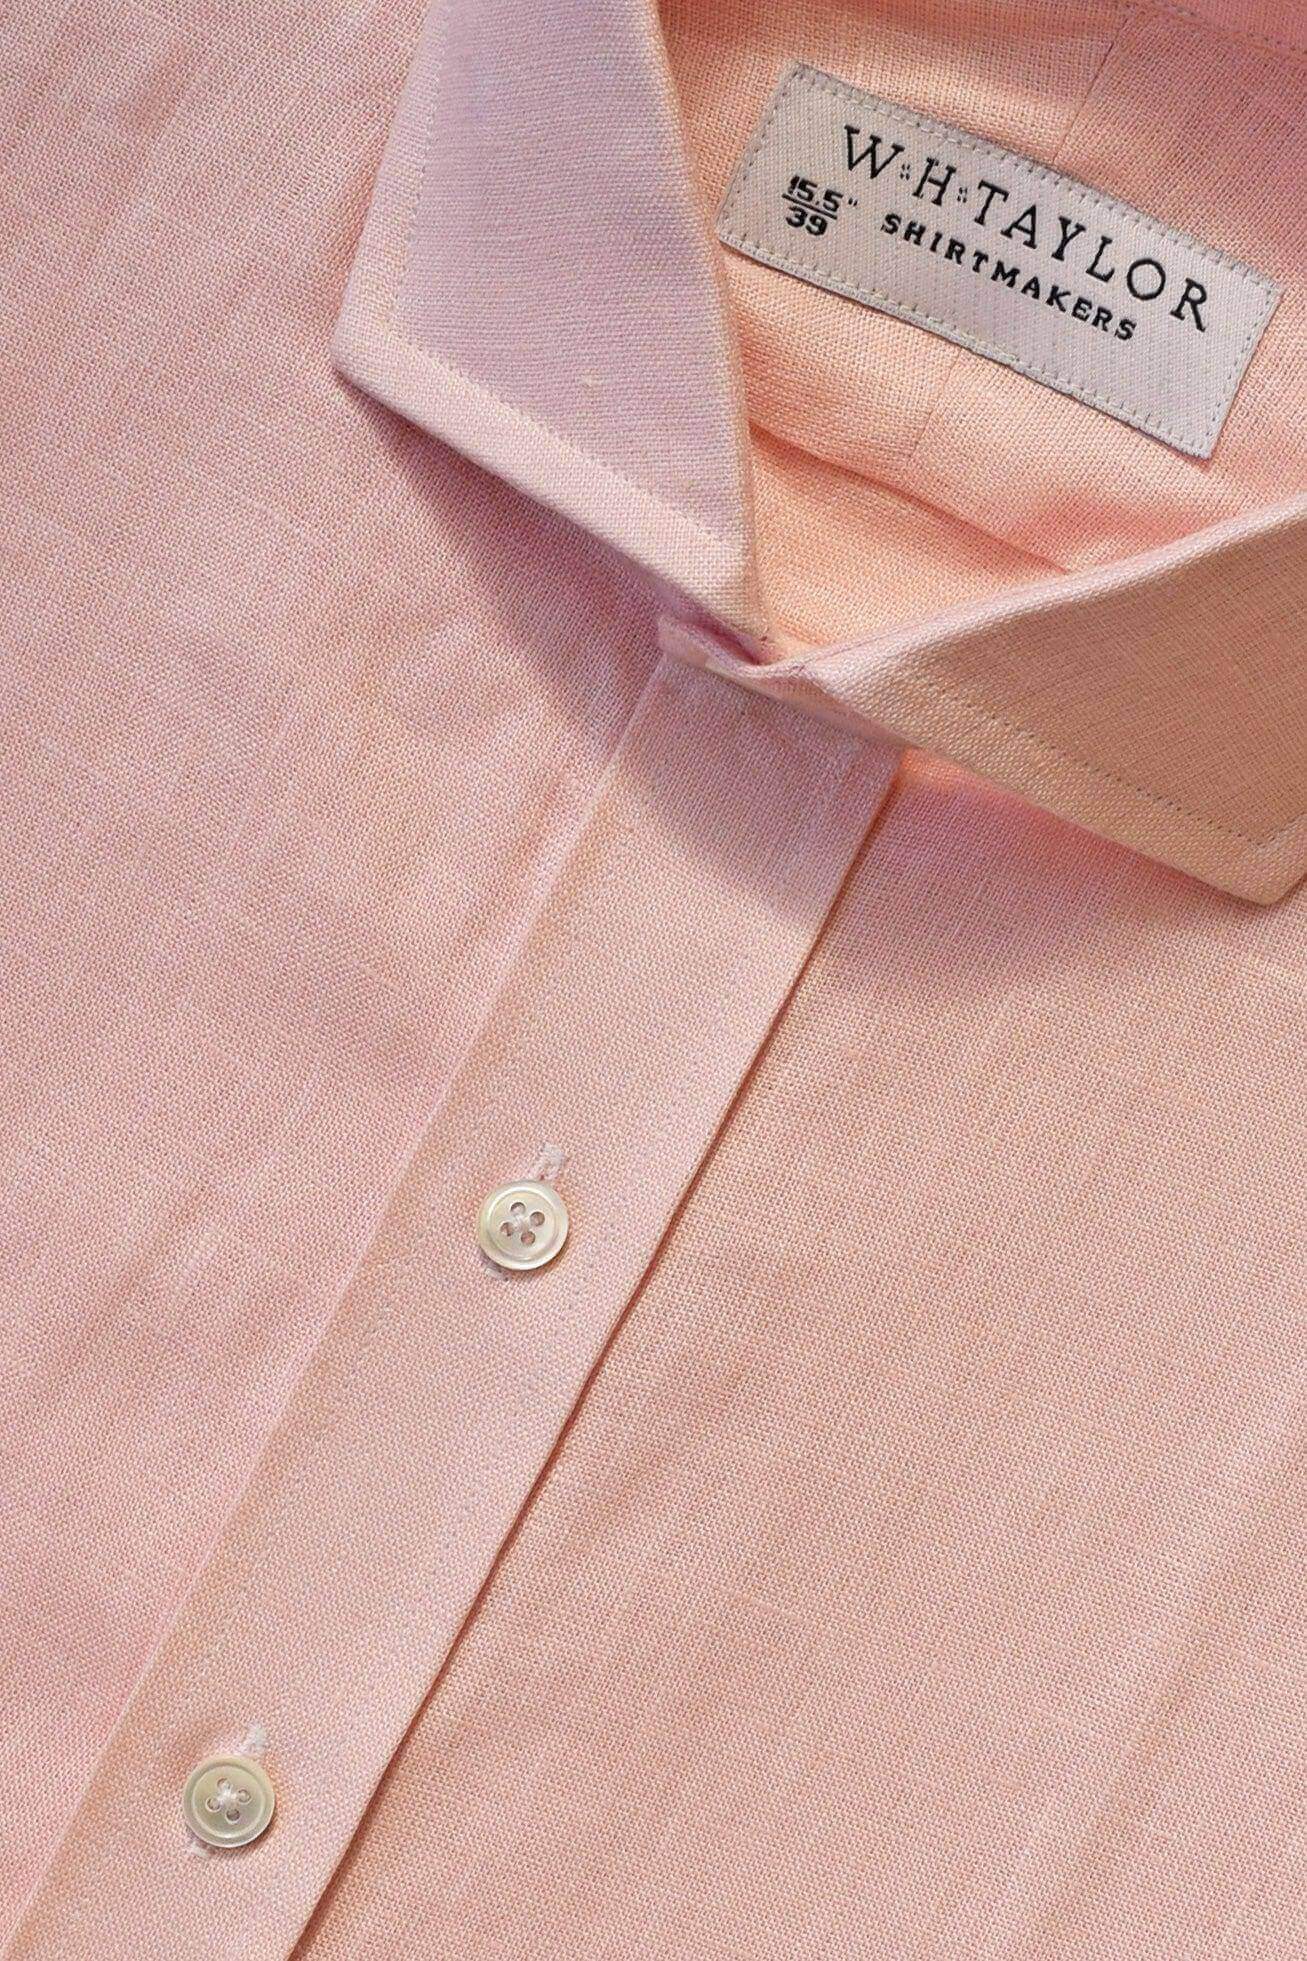 Plain Pink Linen Ladies Bespoke Shirt - whtshirtmakers.com